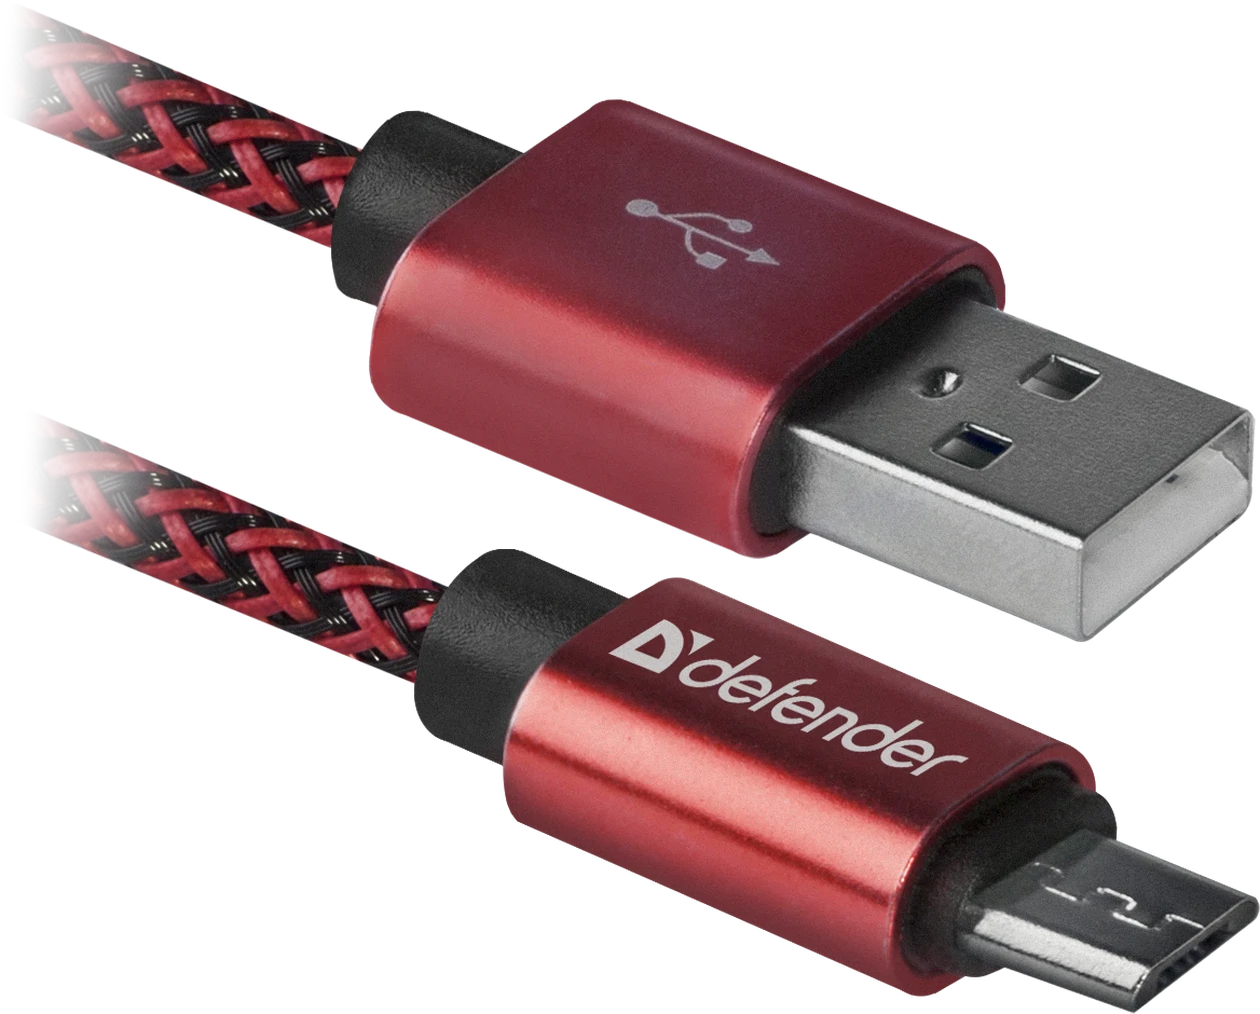 Cablu Date Micro Usb Defender PRO USB2.0 2.1A 1m Rosu thumb